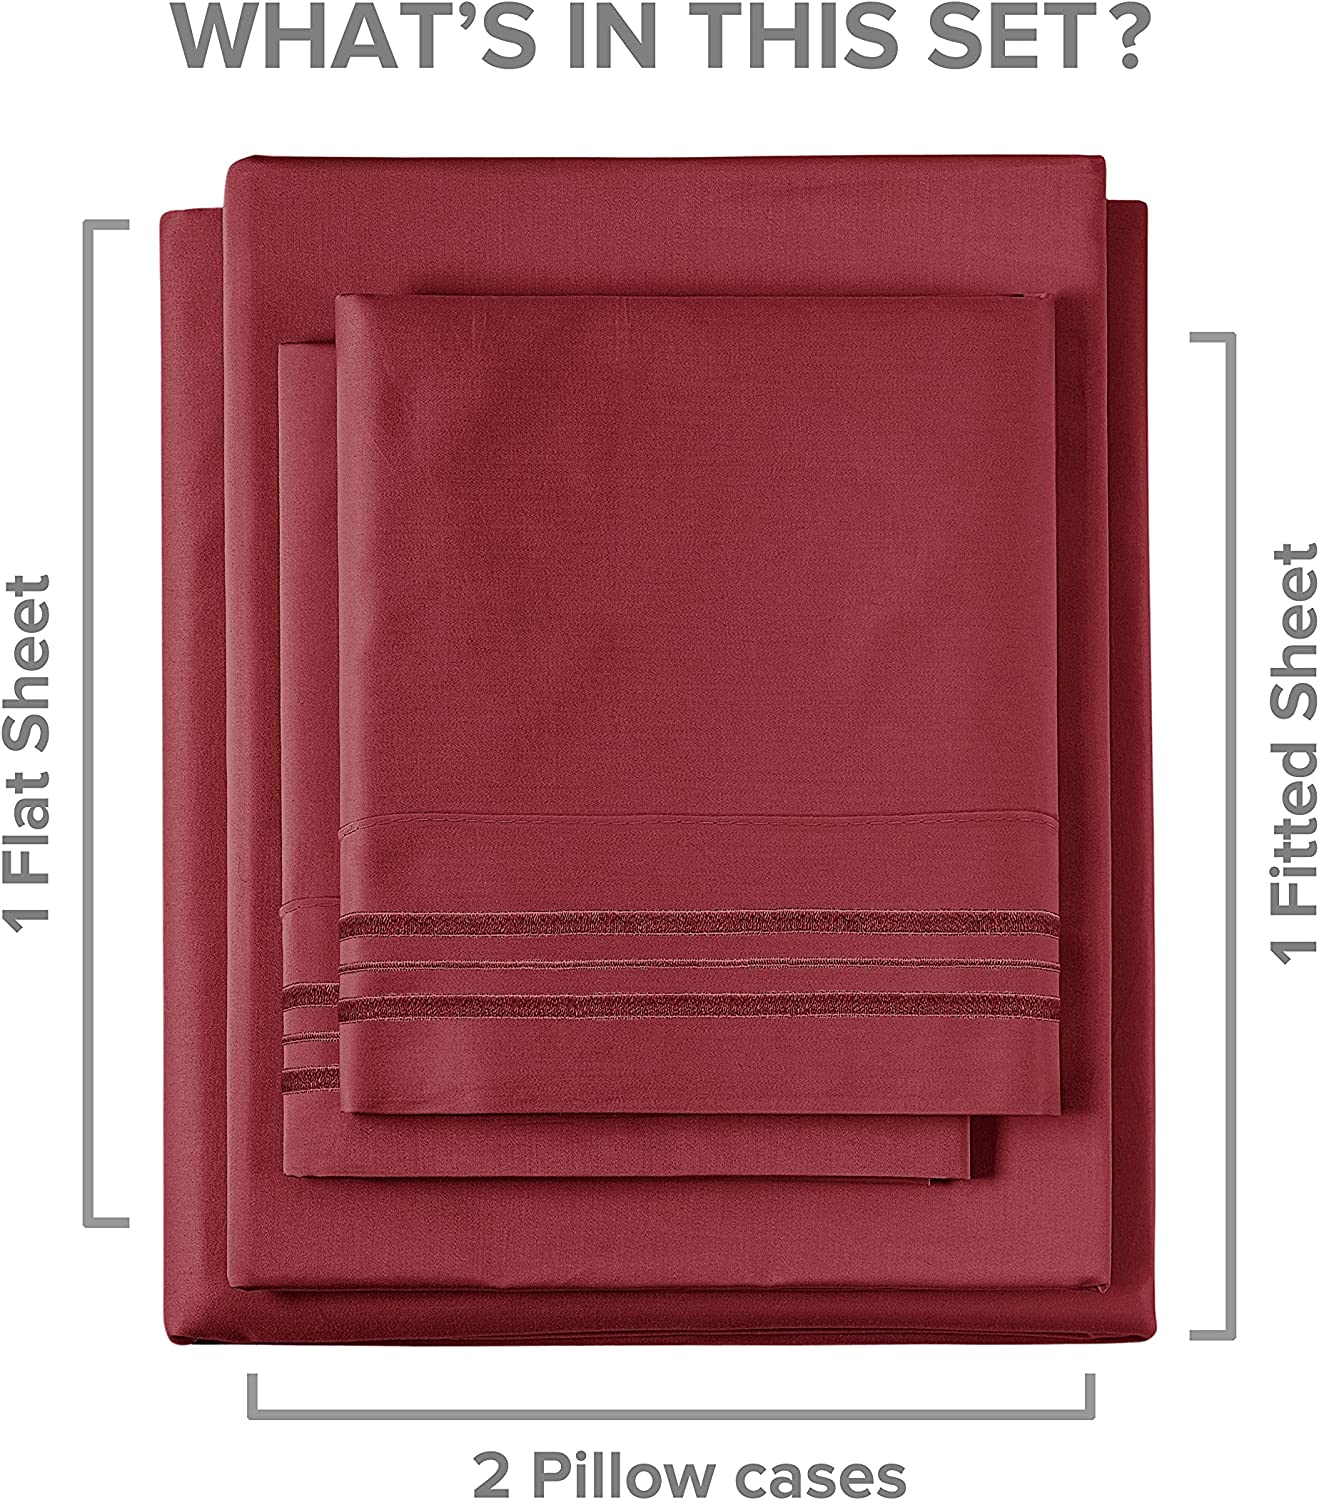 Cotton 400 Thread Count 4 Piece Deep Pocket Sheet Set - Burgundy